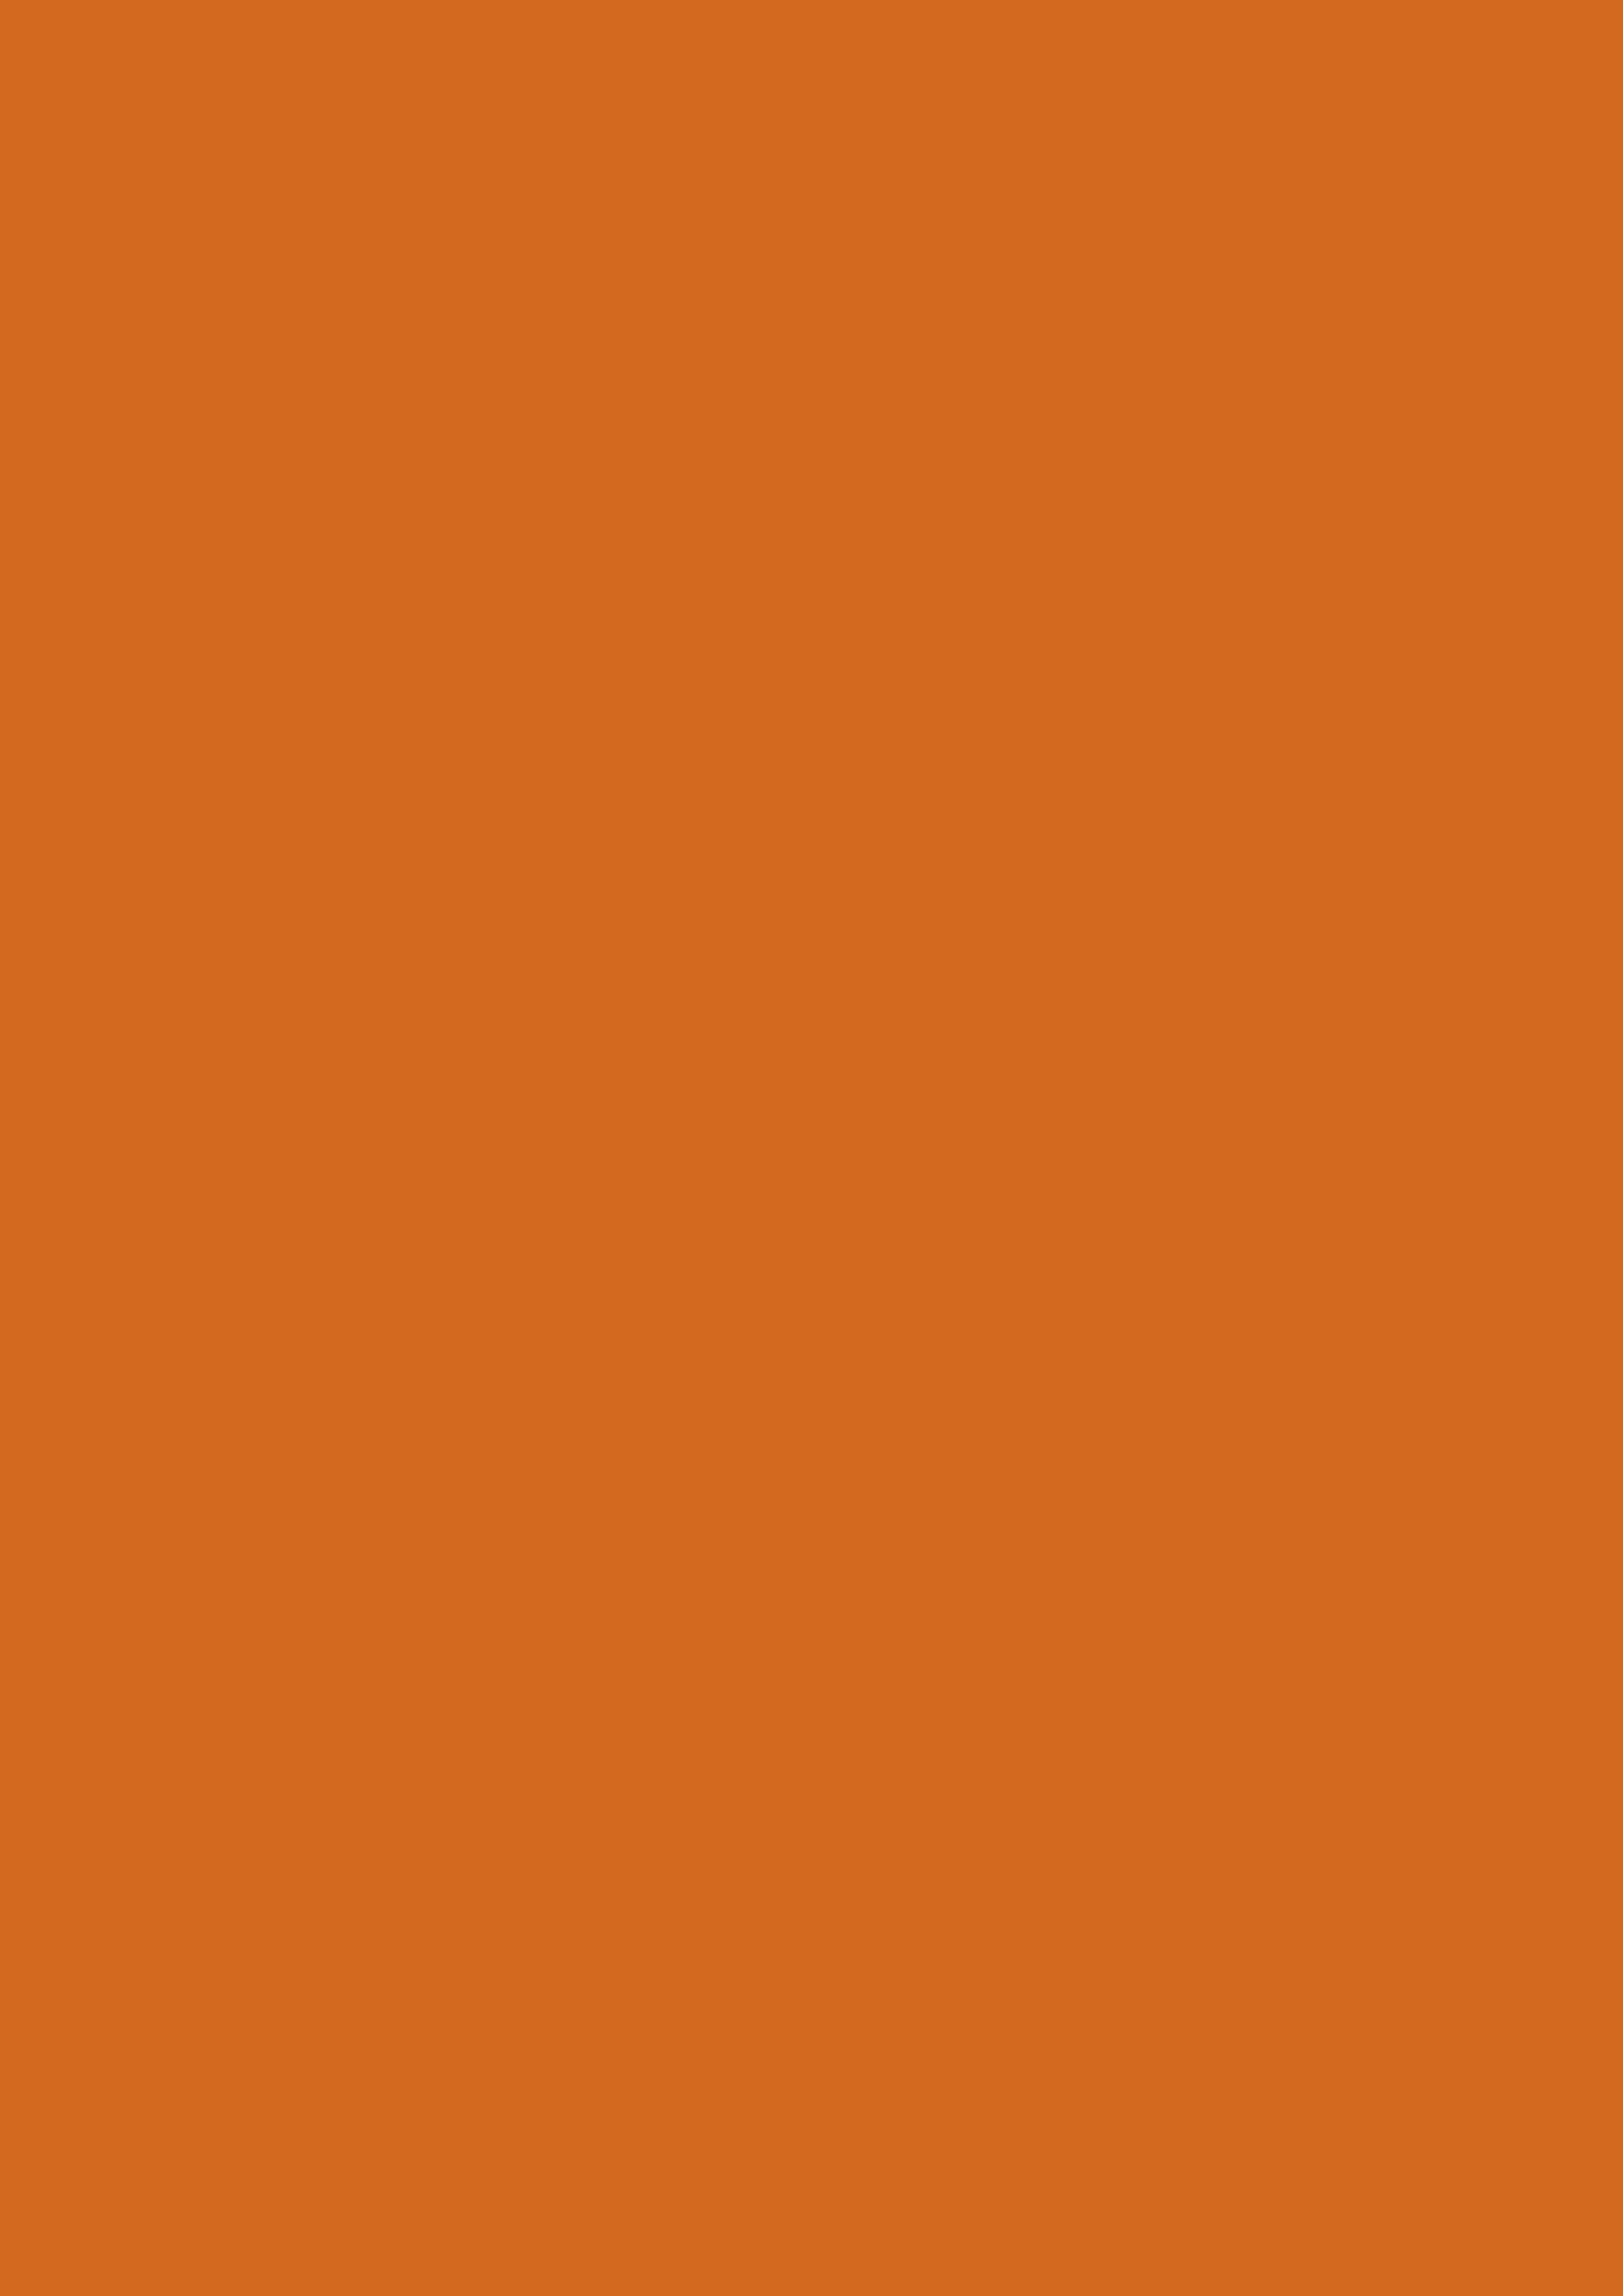 2480x3508 Cinnamon Solid Color Background